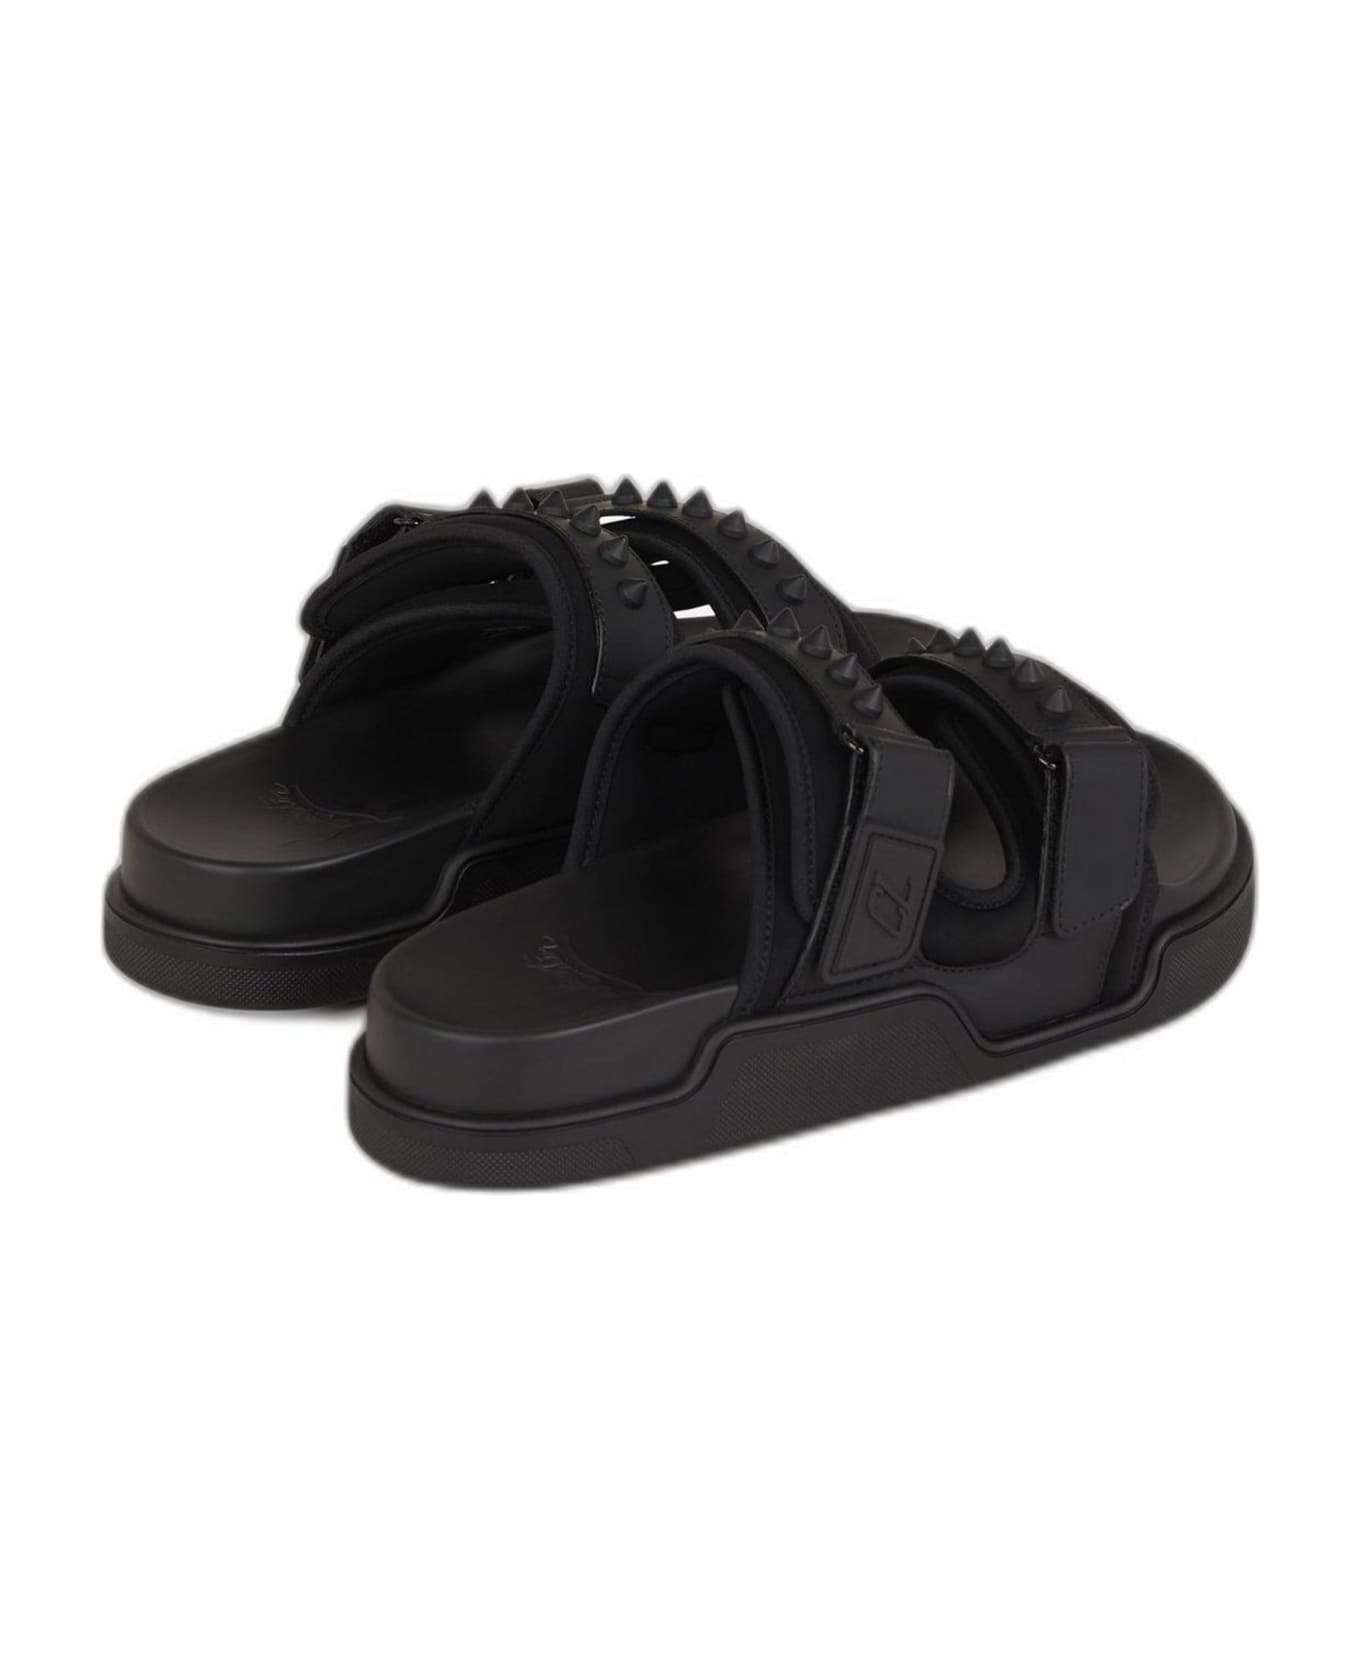 Christian Louboutin Leather Velcro Sandals - Black